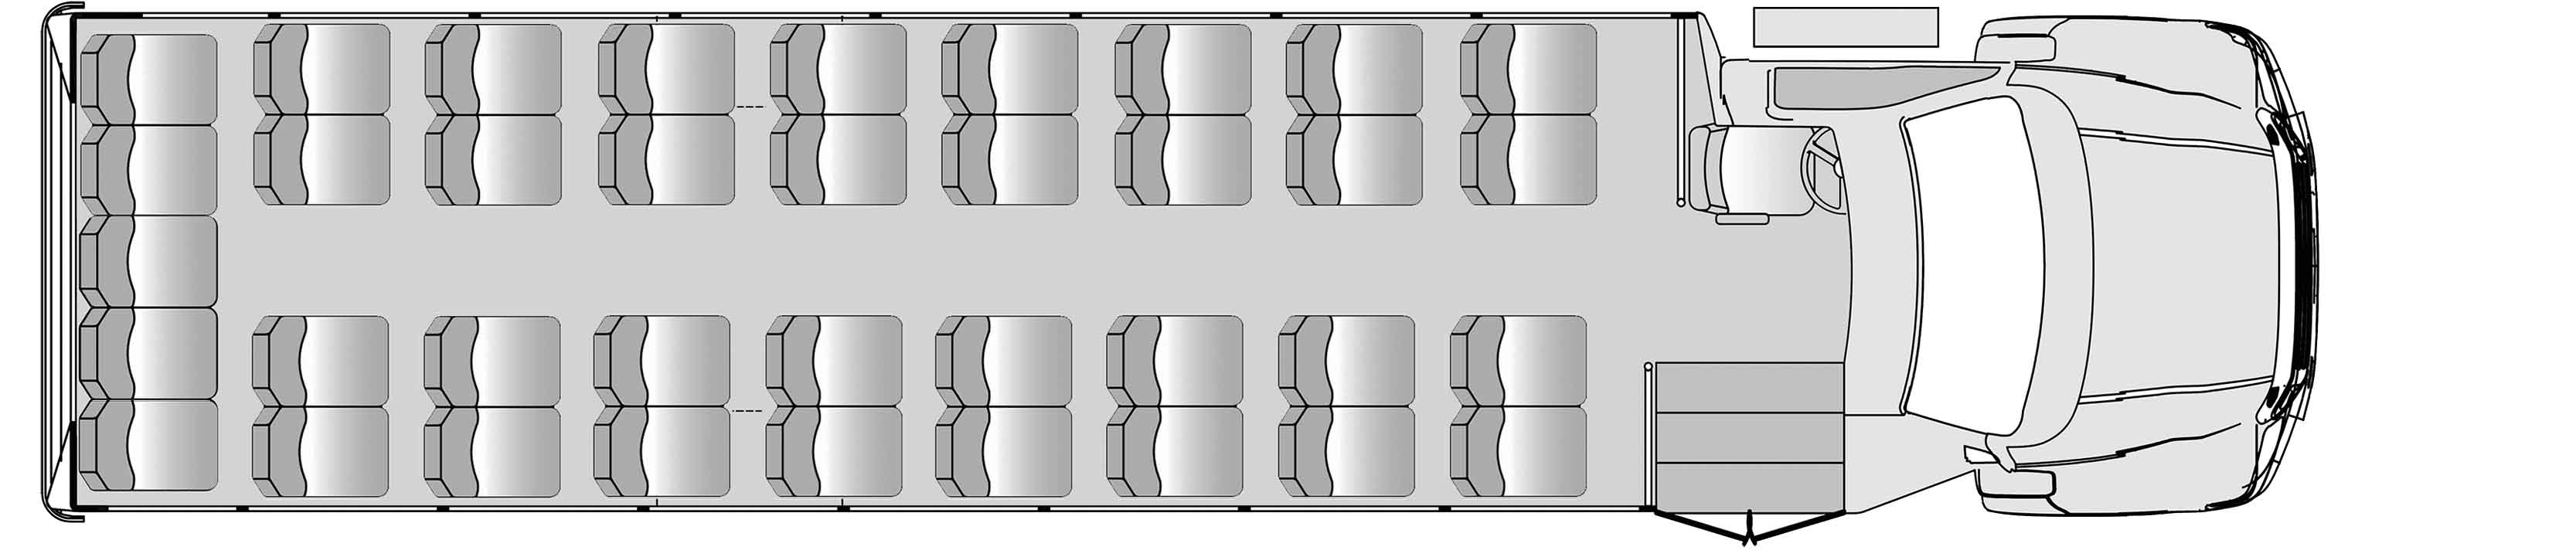 37 Passenger Plus Driver Floorplan Image